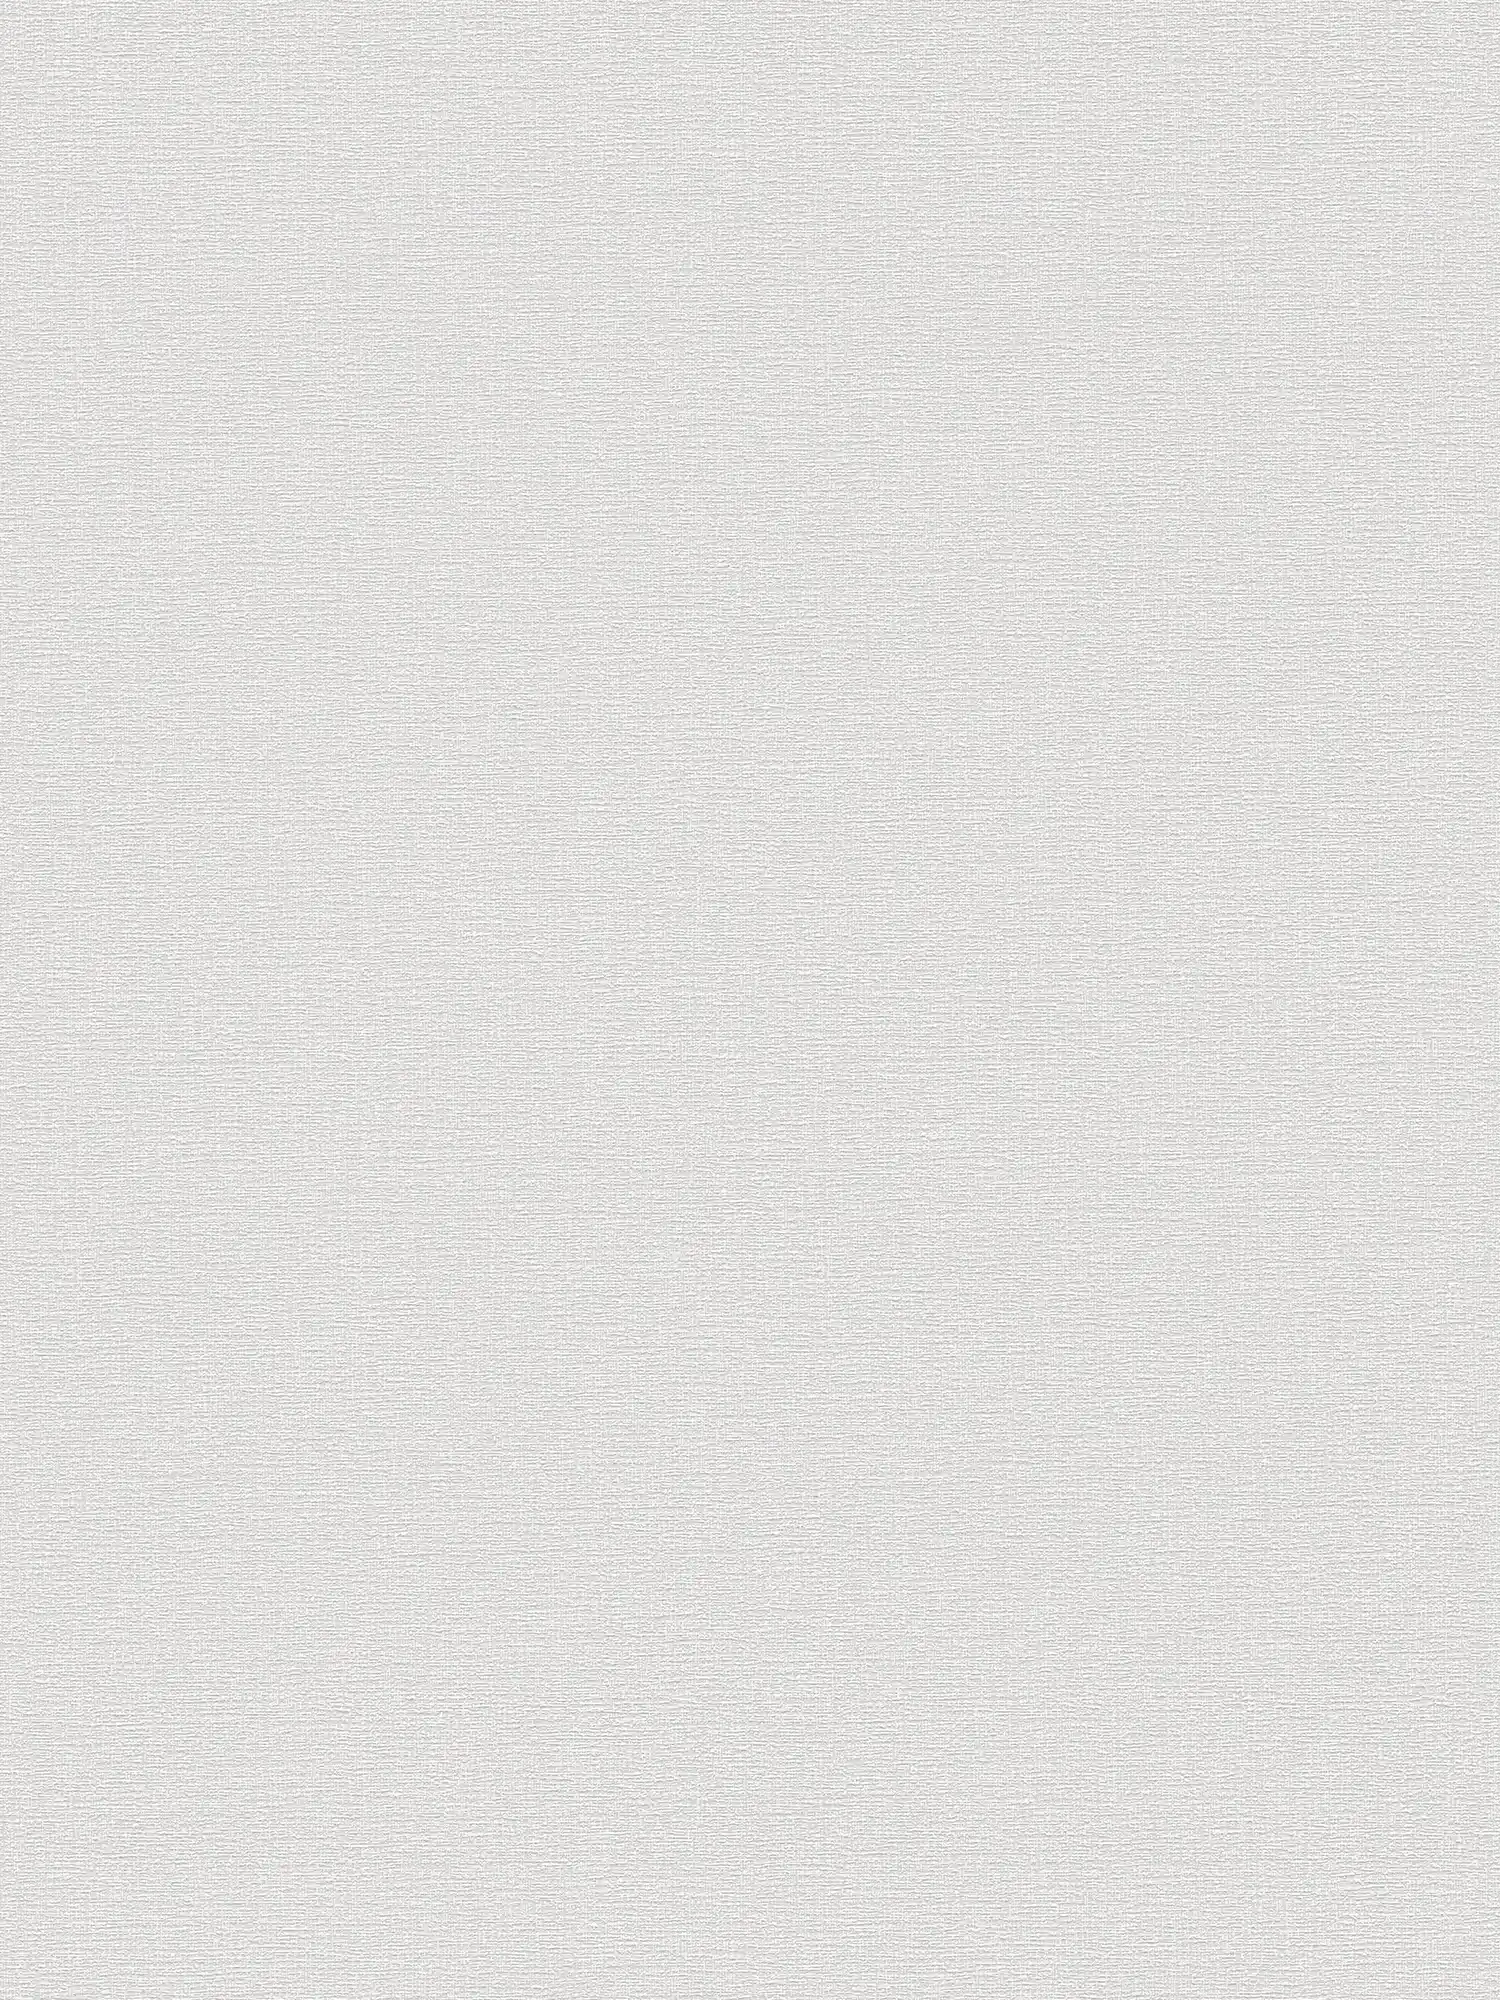 Single-coloured plain wallpaper soft shade - grey
